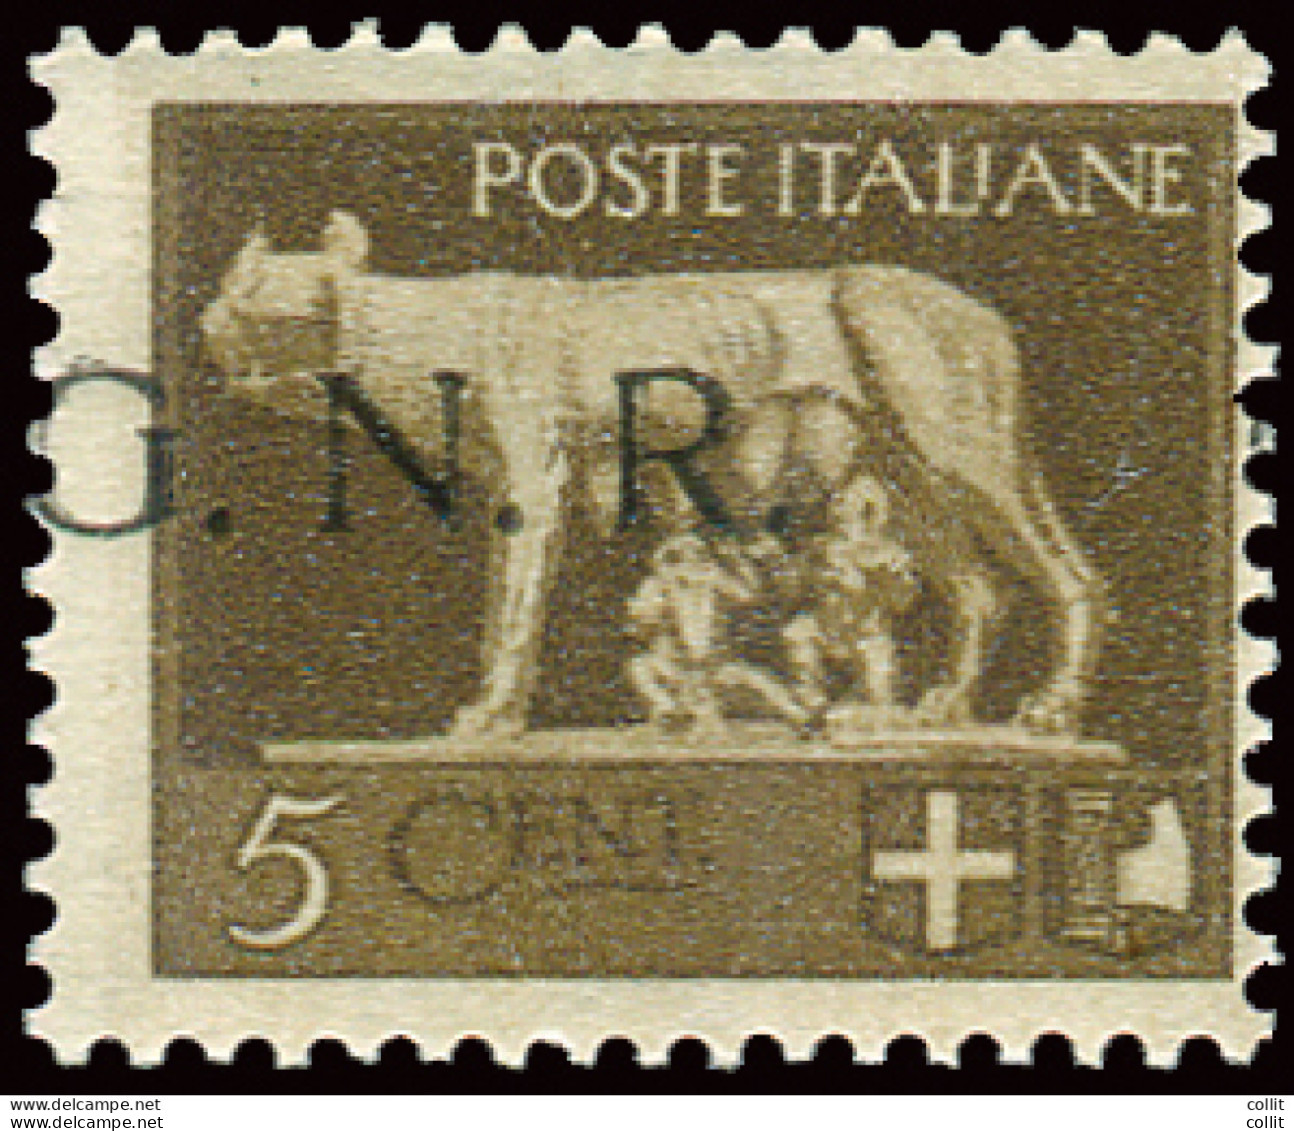 G.N.R. Cent. 5 "Brescia" N. 470/Ie Soprastampa Fortemente Spostata A Sinistra - Mint/hinged